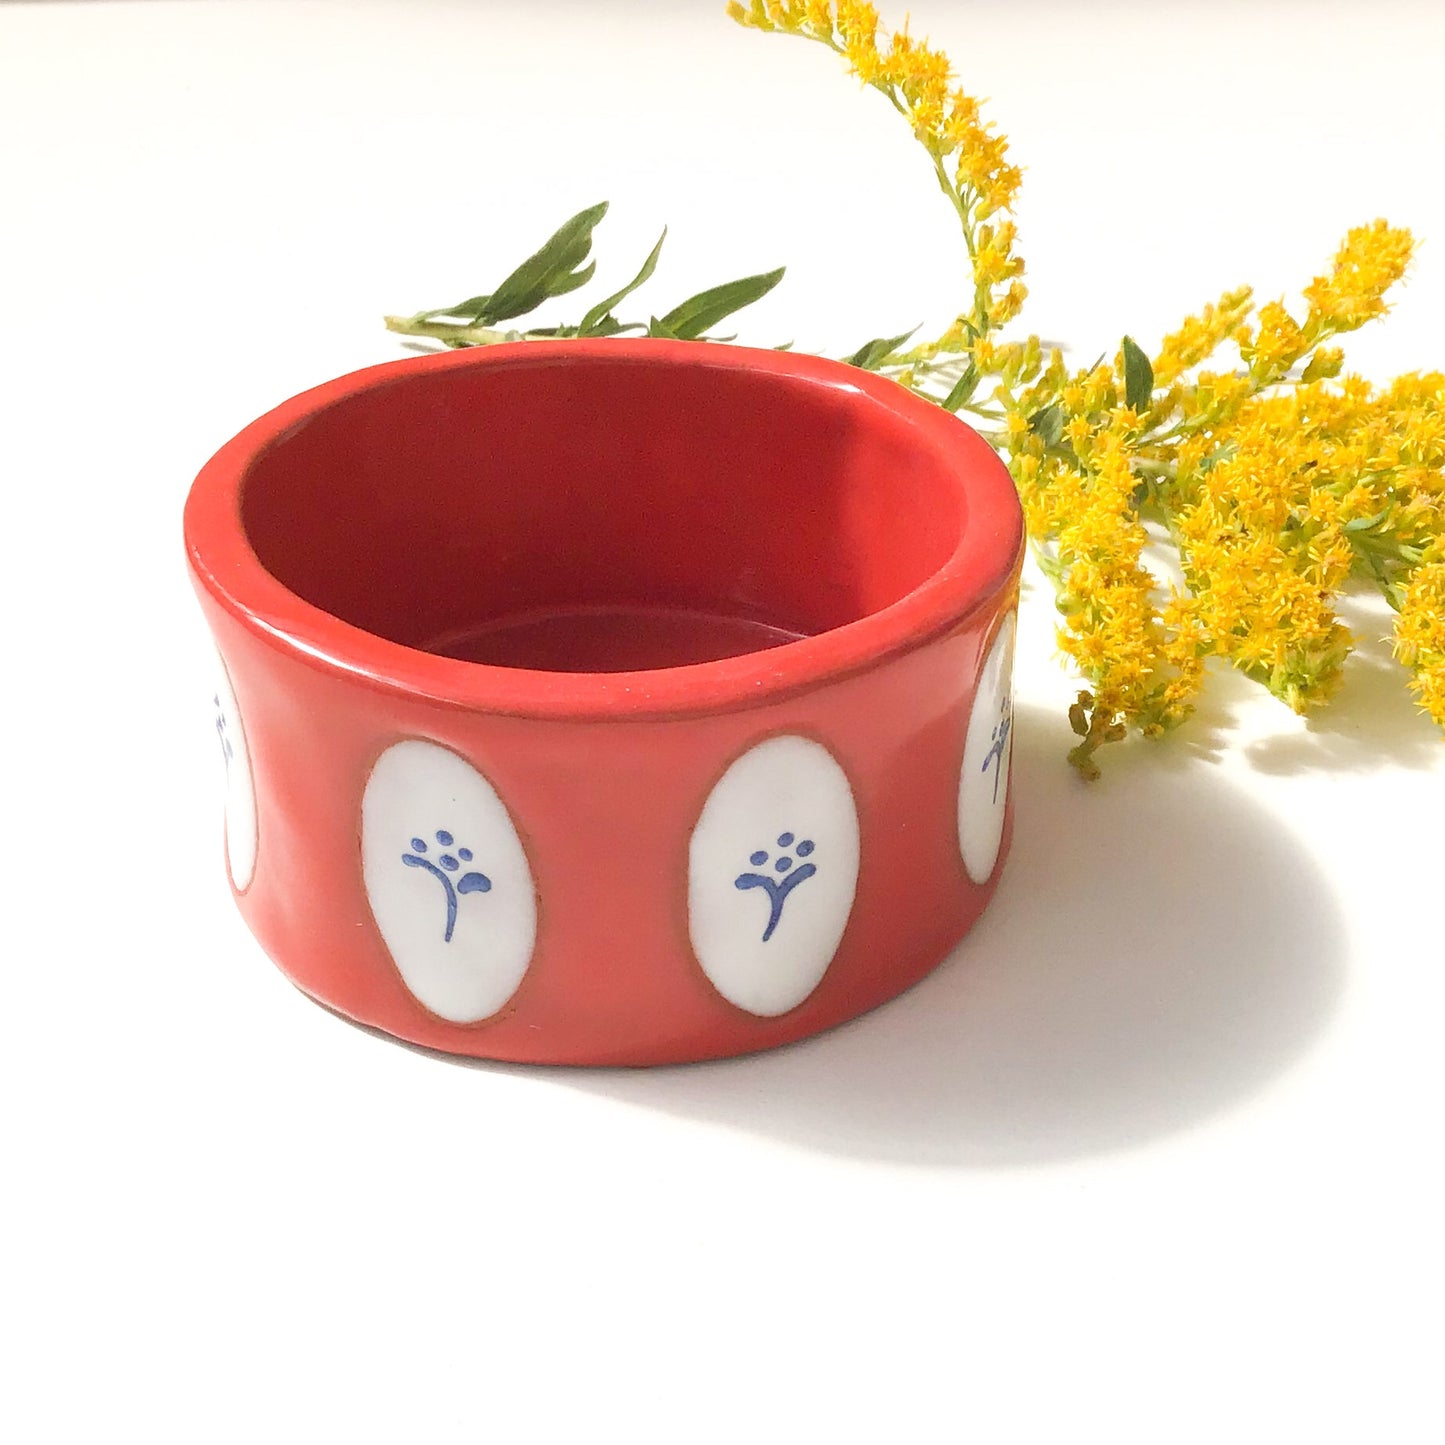 Red & White Pot with Blue Floral Design - Decorative Ceramic Vessel